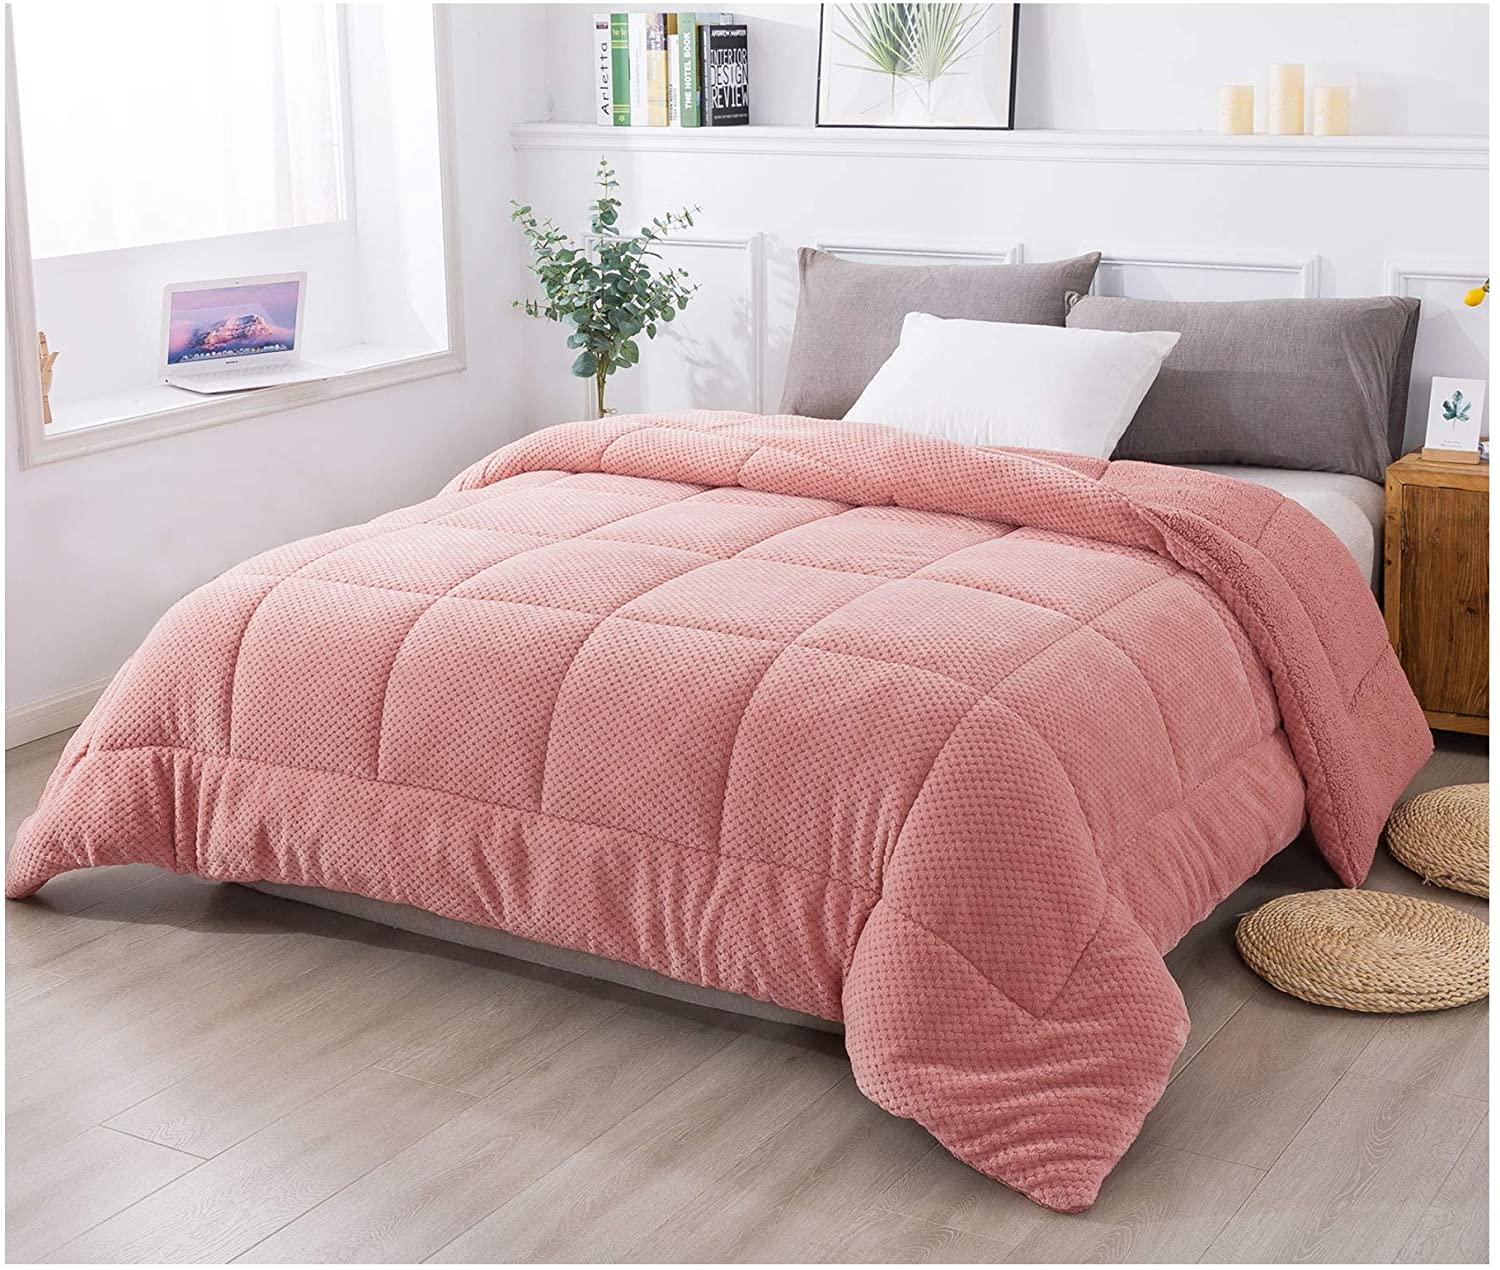 Kasentex Luxury Reversible Plush Sherpa Comforter for $32.49 Shipped